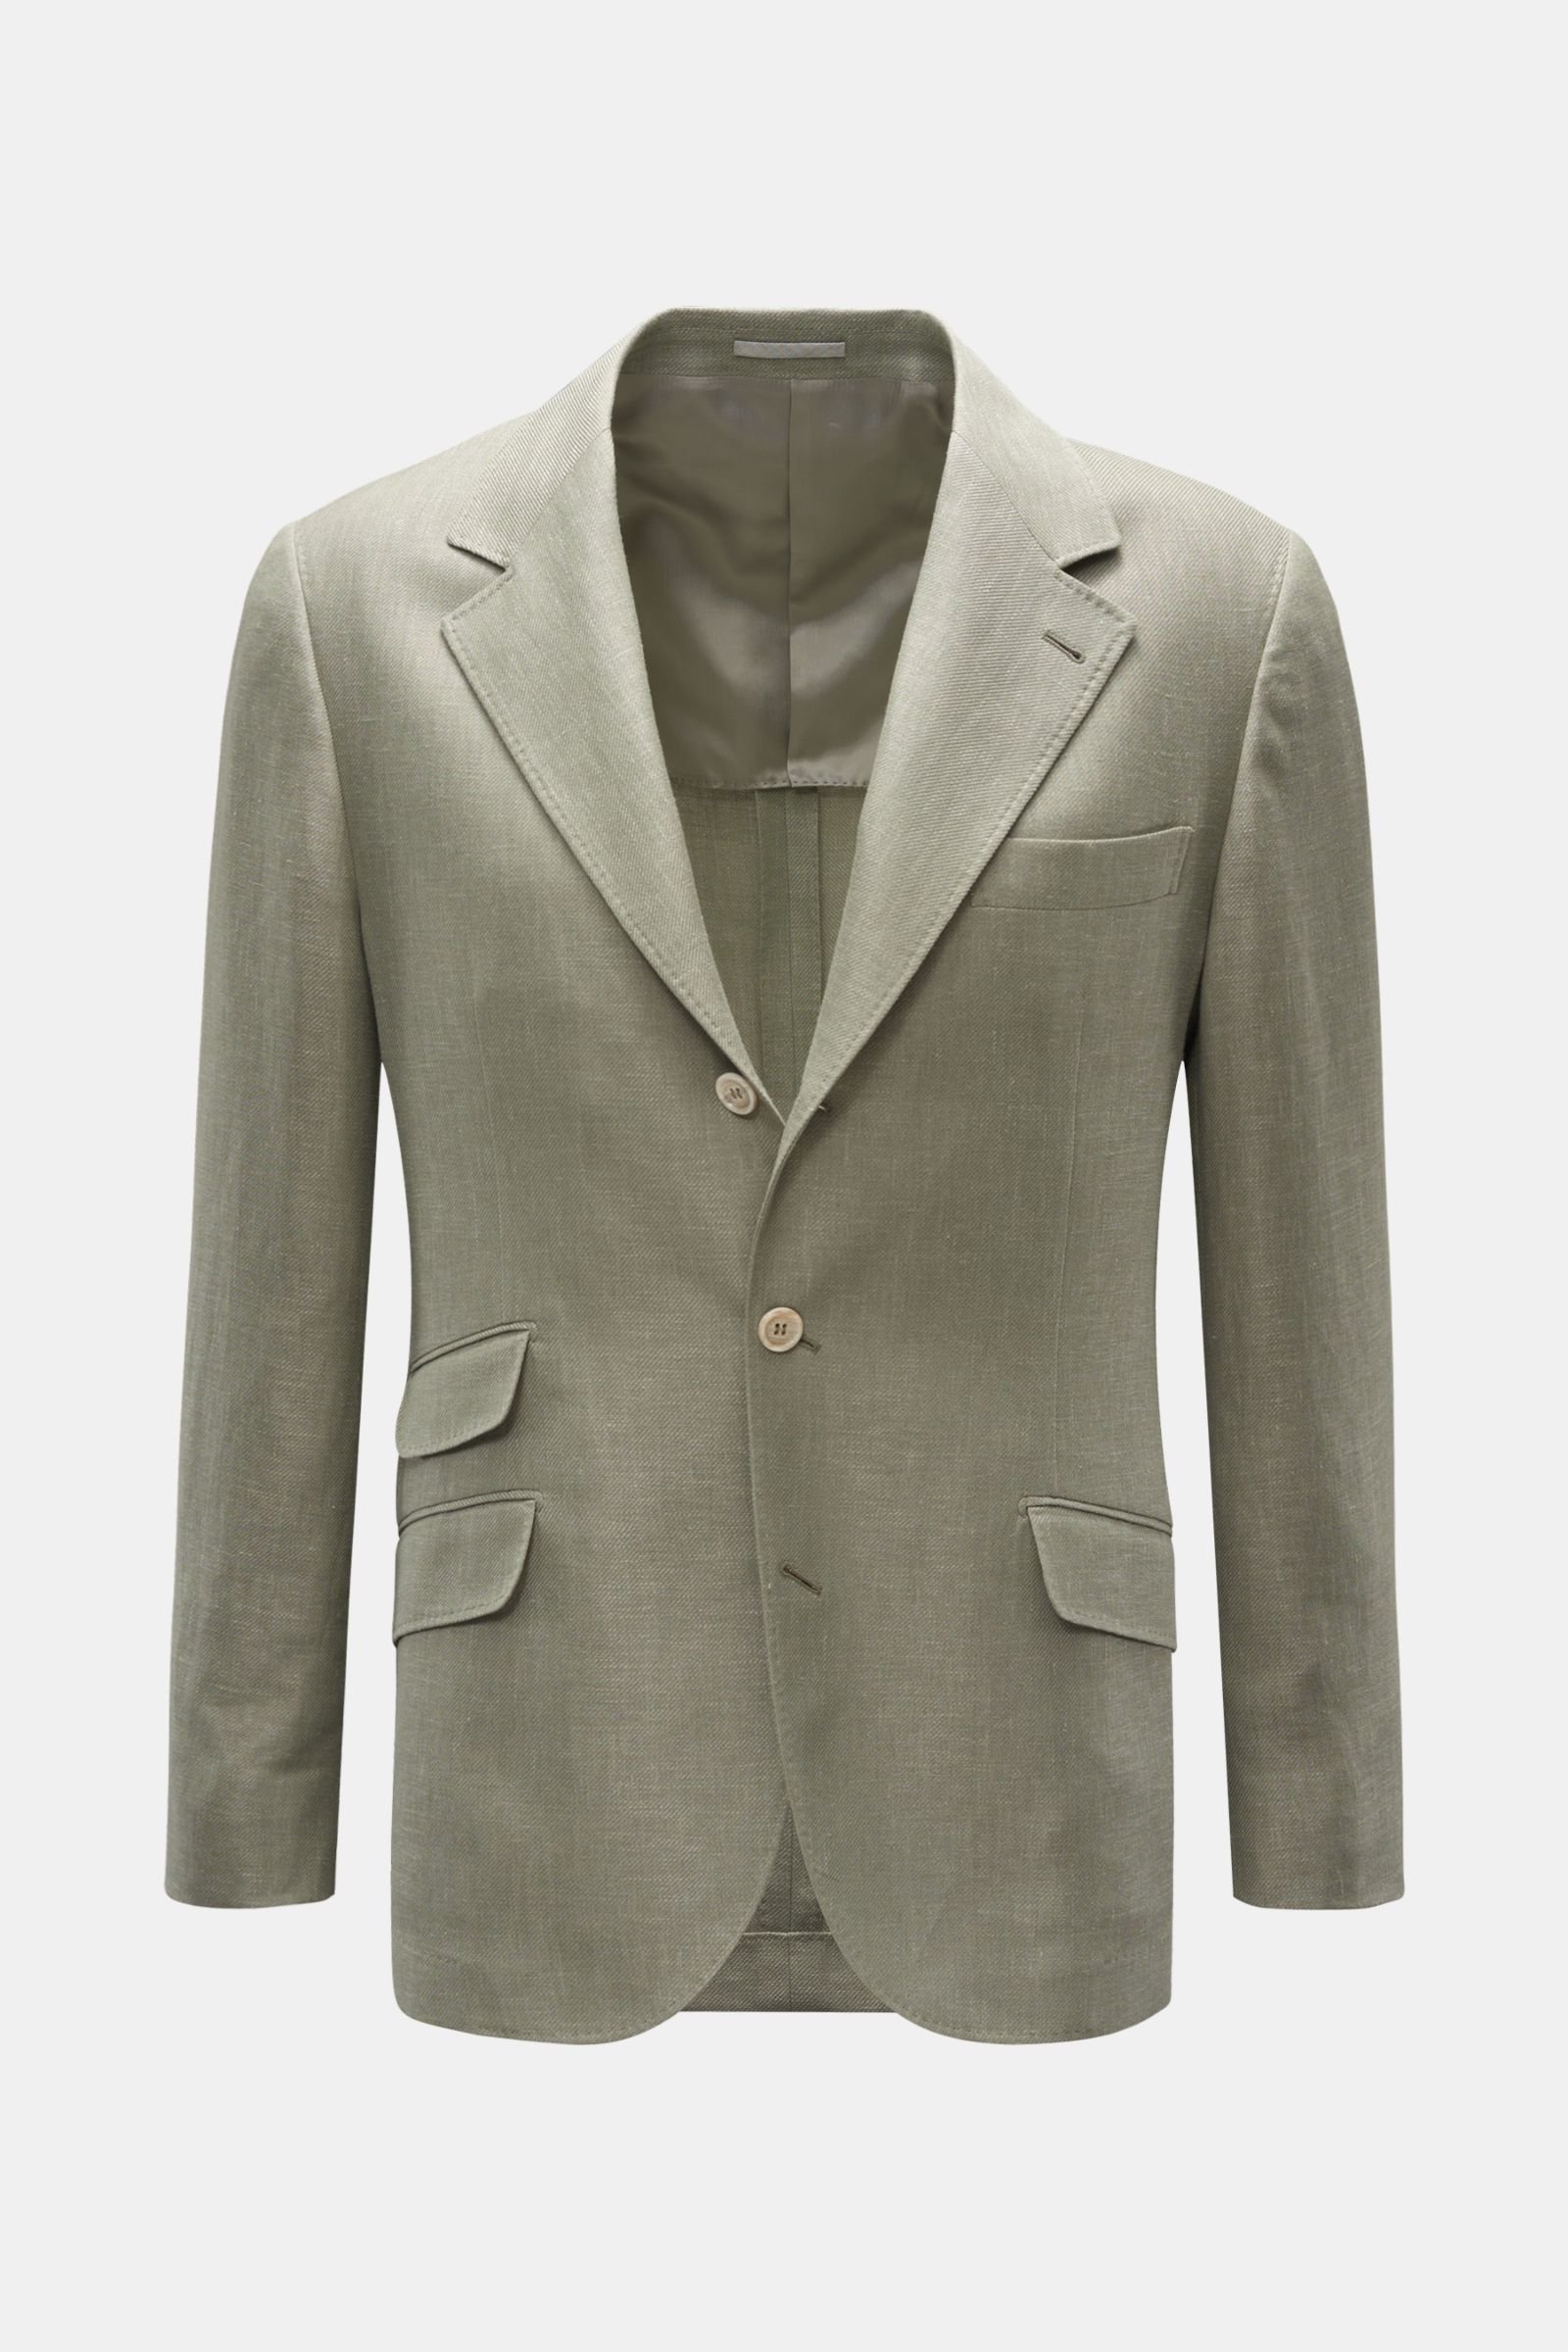 Smart-casual jacket grey-green